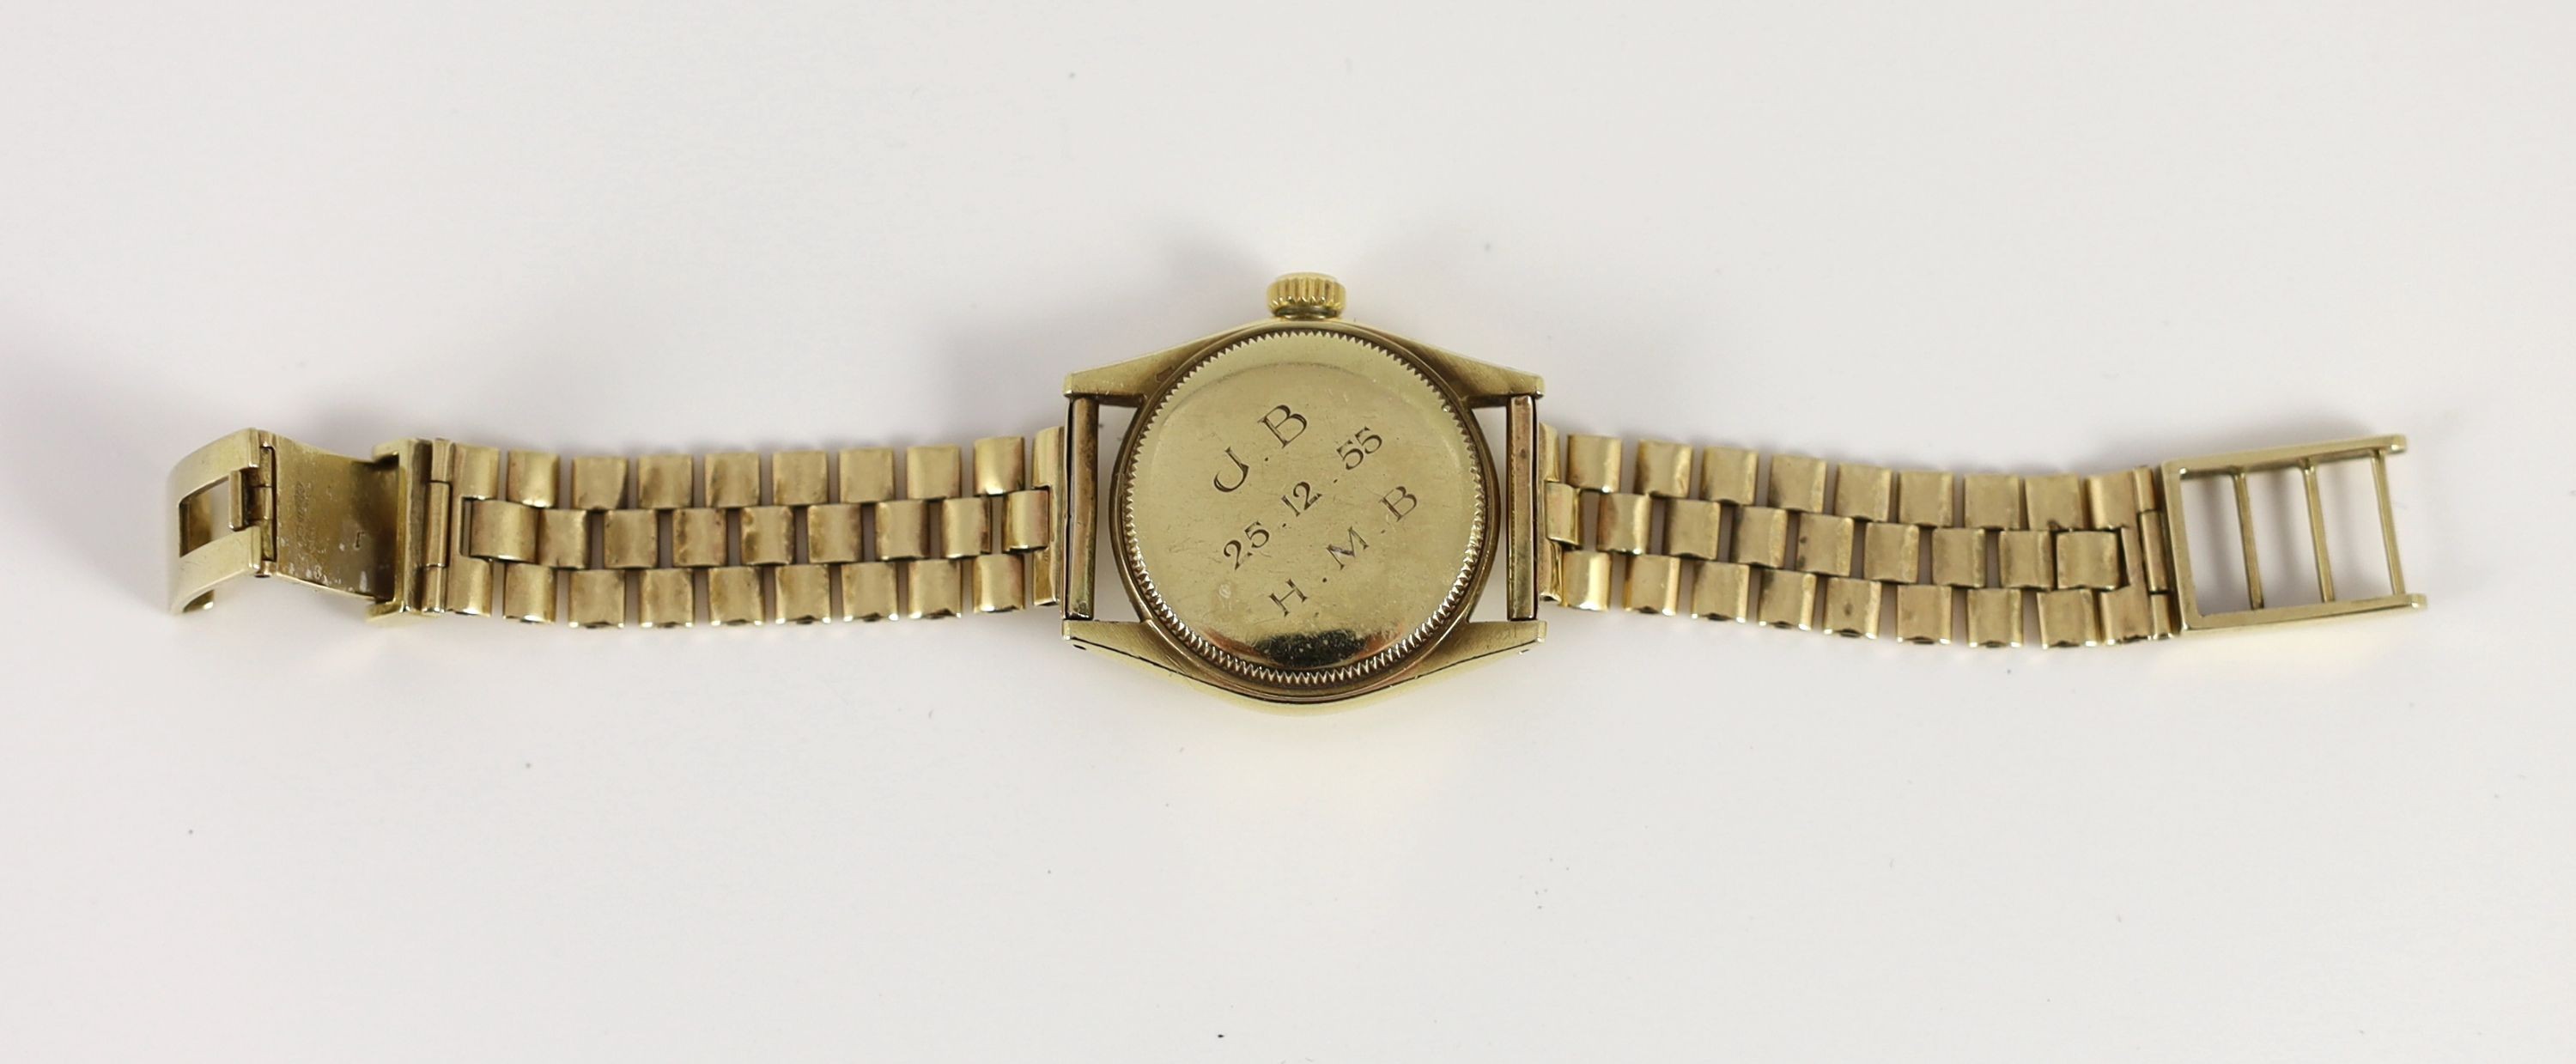 A gentleman's 1950's 9ct gold Rolex Oyster Speed King Precision wrist watch